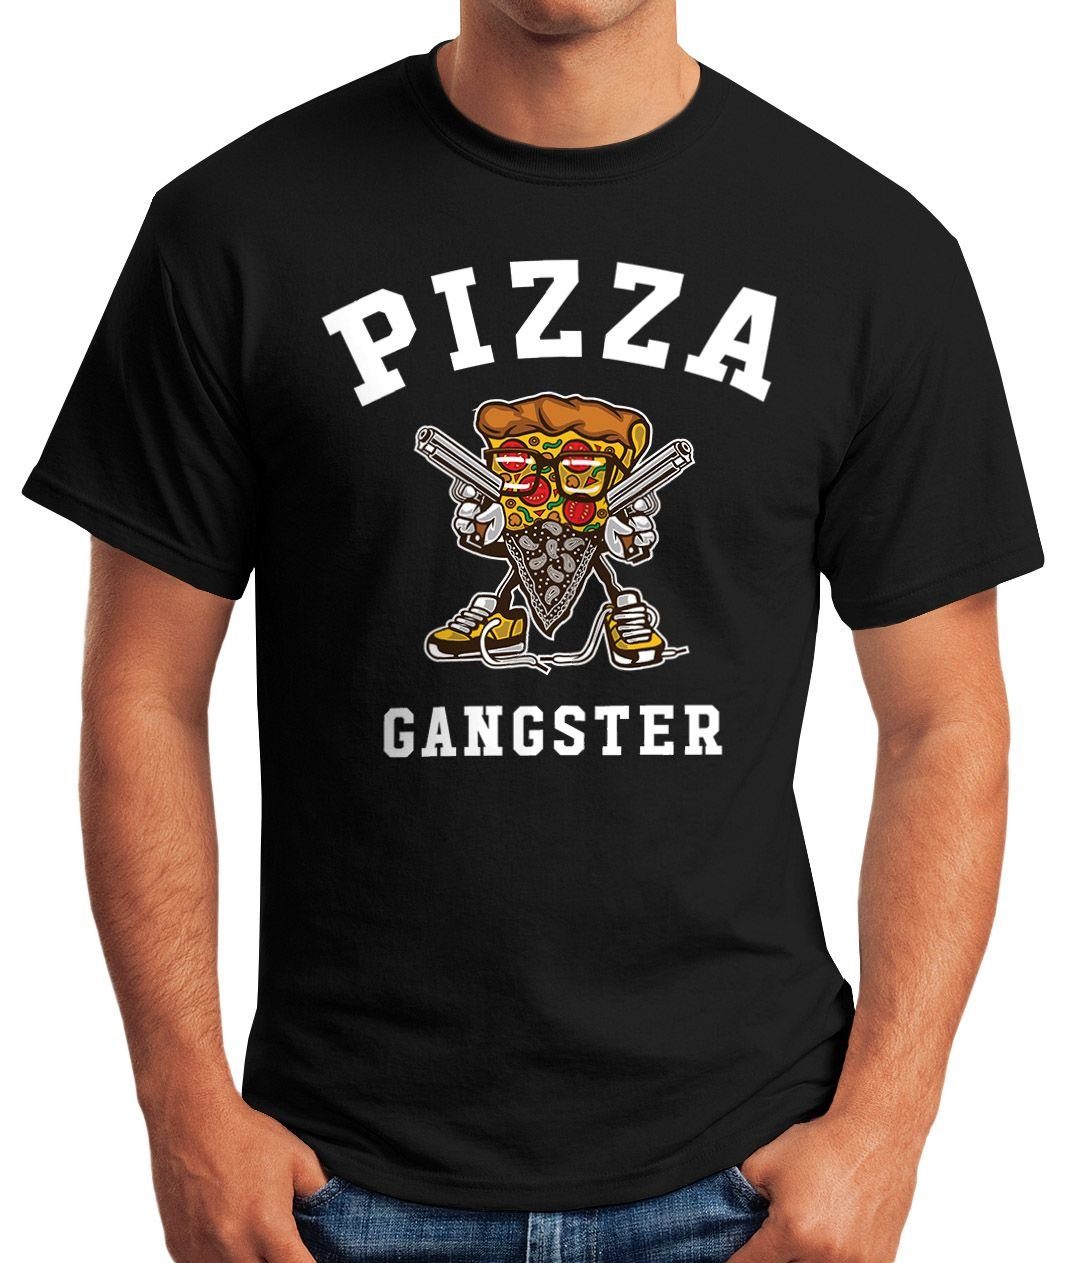 mit Print-Shirt Moonworks® Print Gangster schwarz Herren Fun-Shirt T-Shirt MoonWorks Pizza